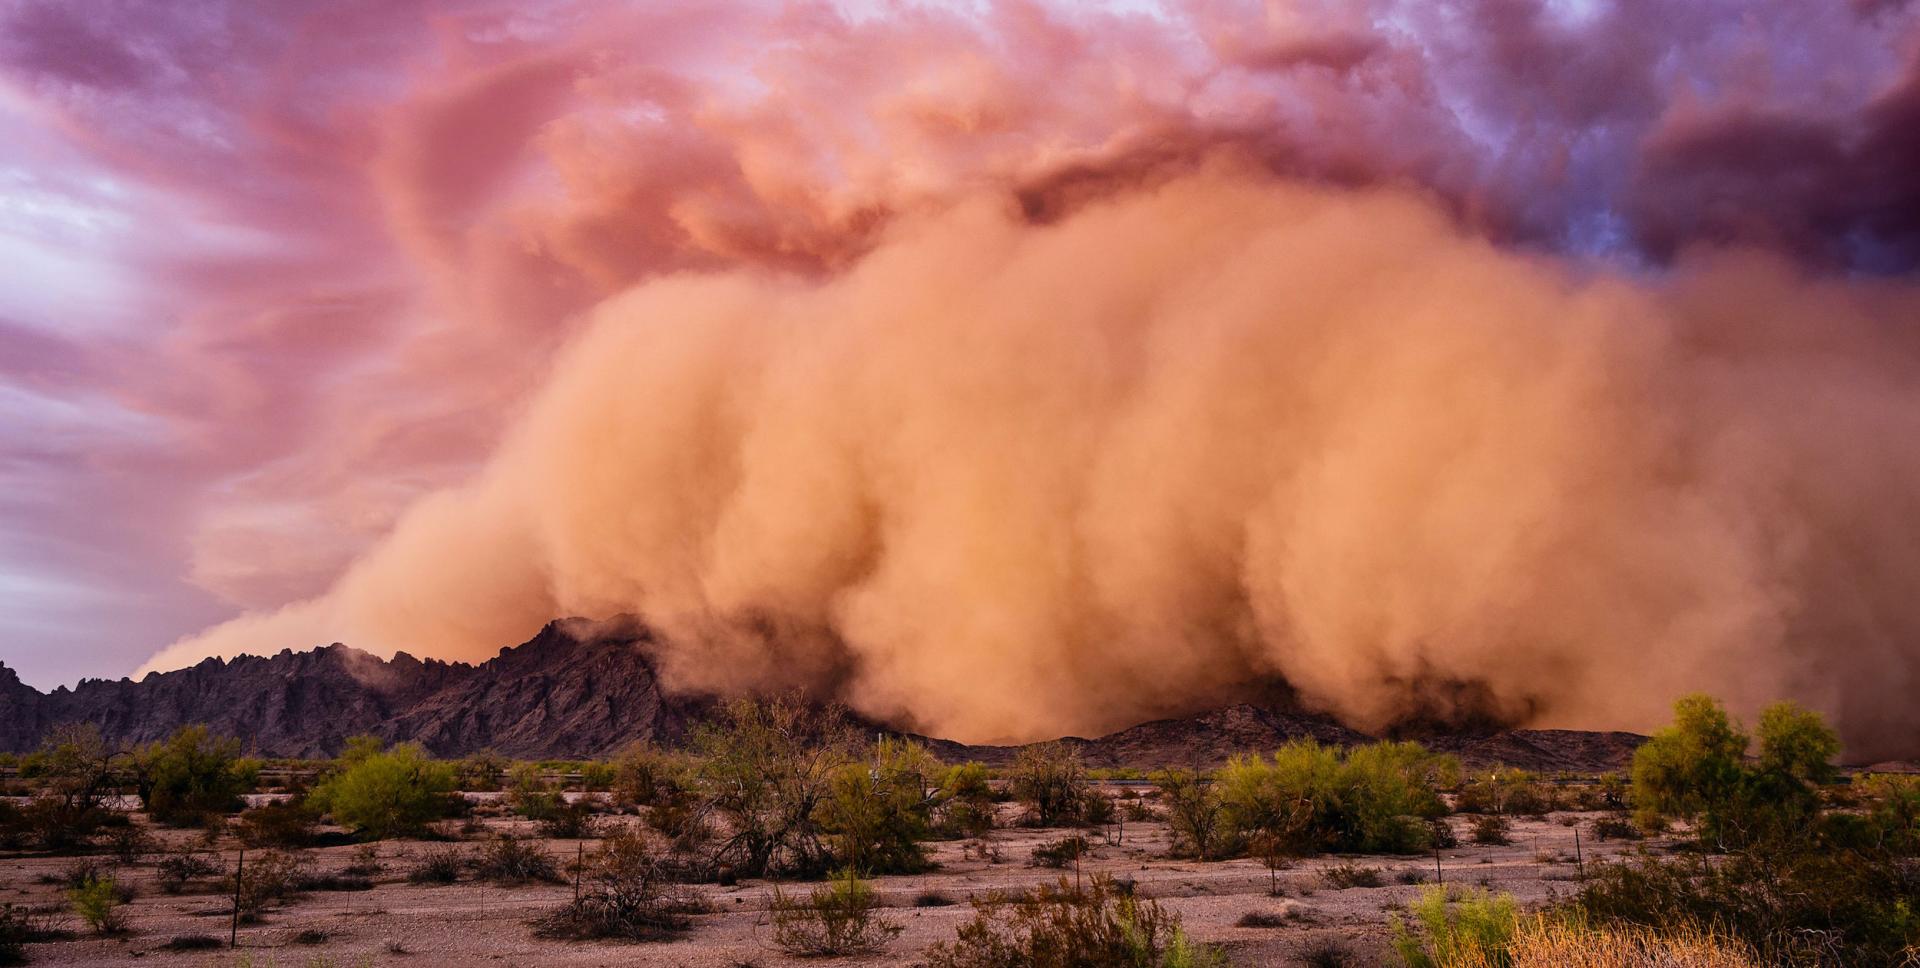 A dust storm in the Arizona desert